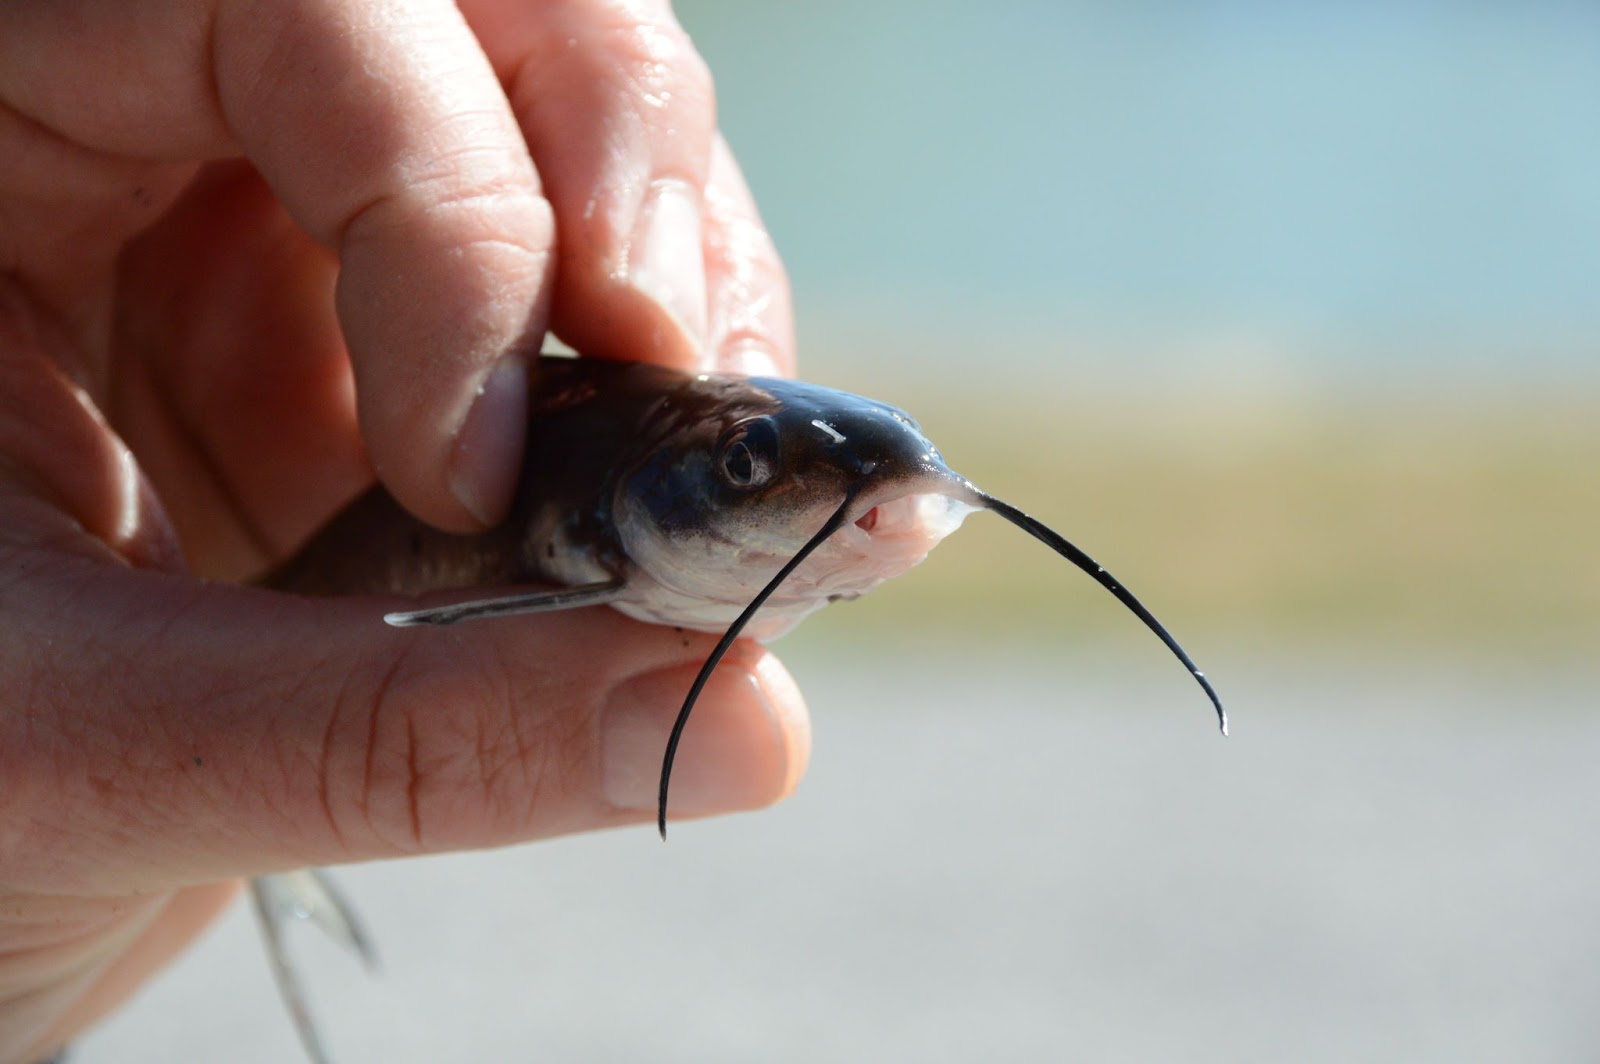 Small catfish held in hand